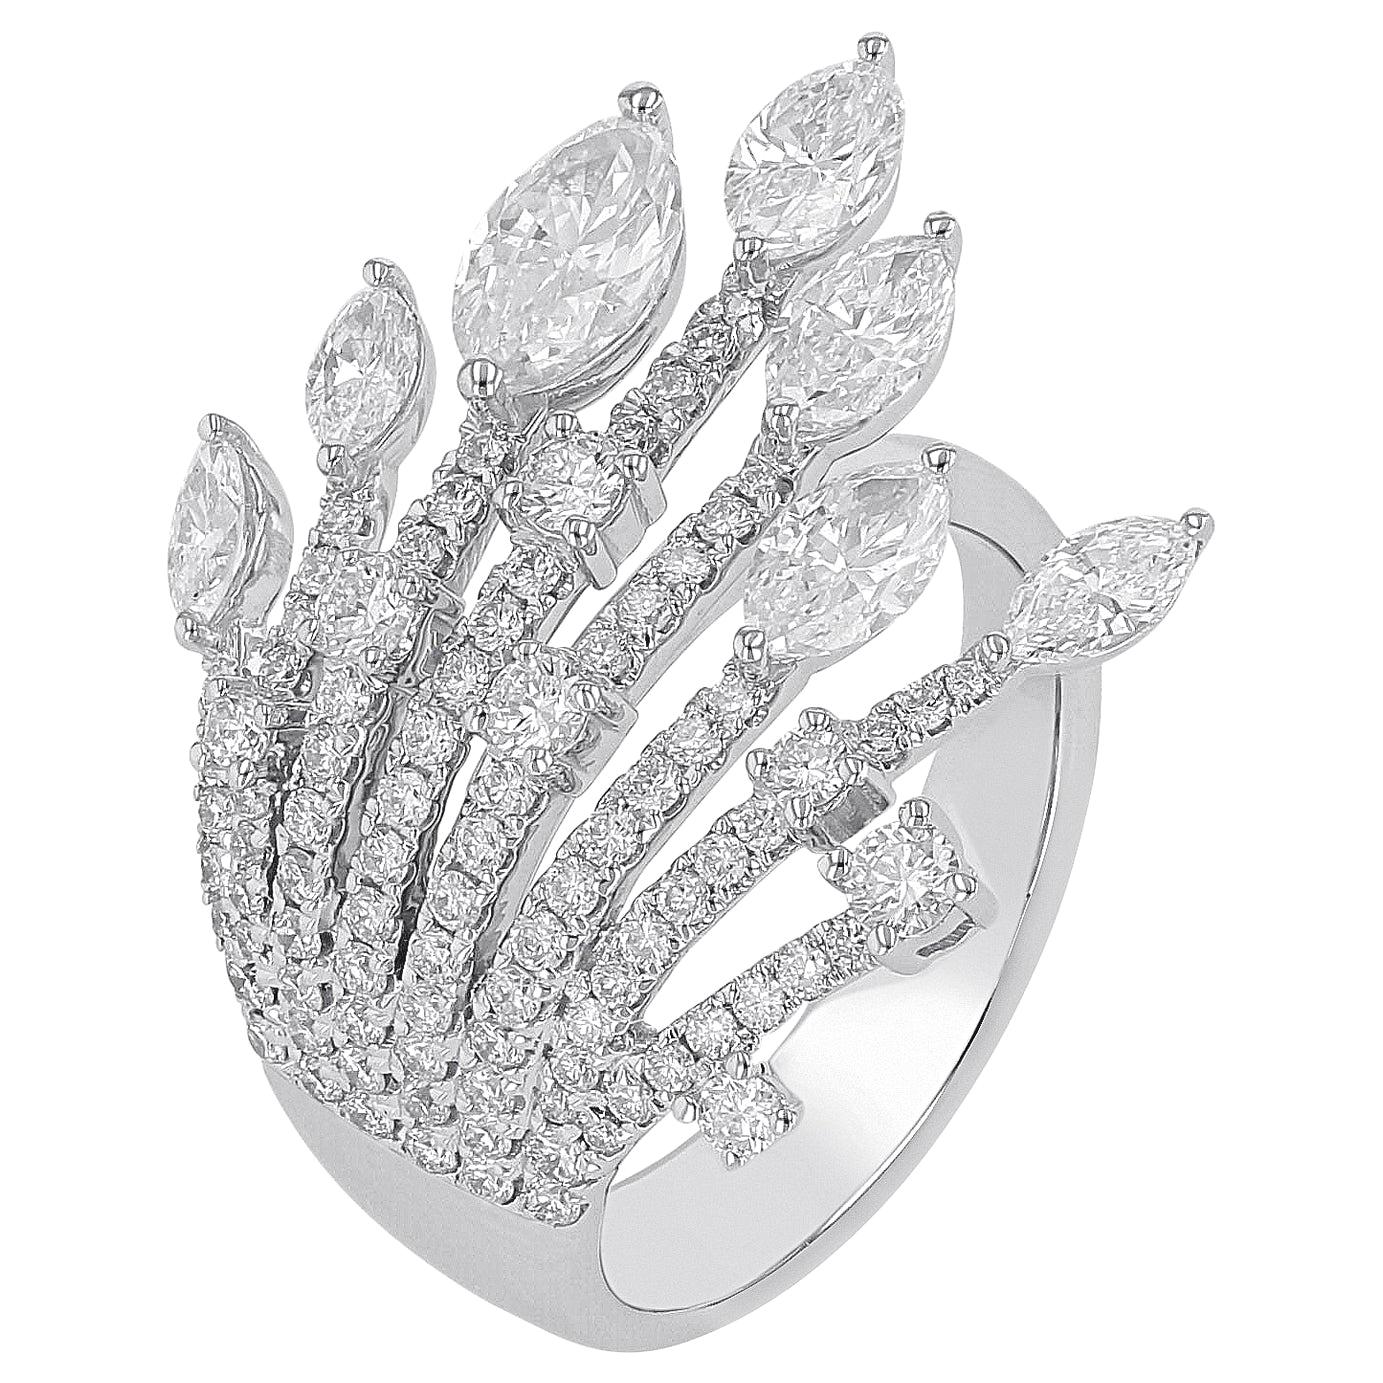 Amwaj Jewelry Marquise and Round Cut Diamond Ring in 18 Karat White Gold